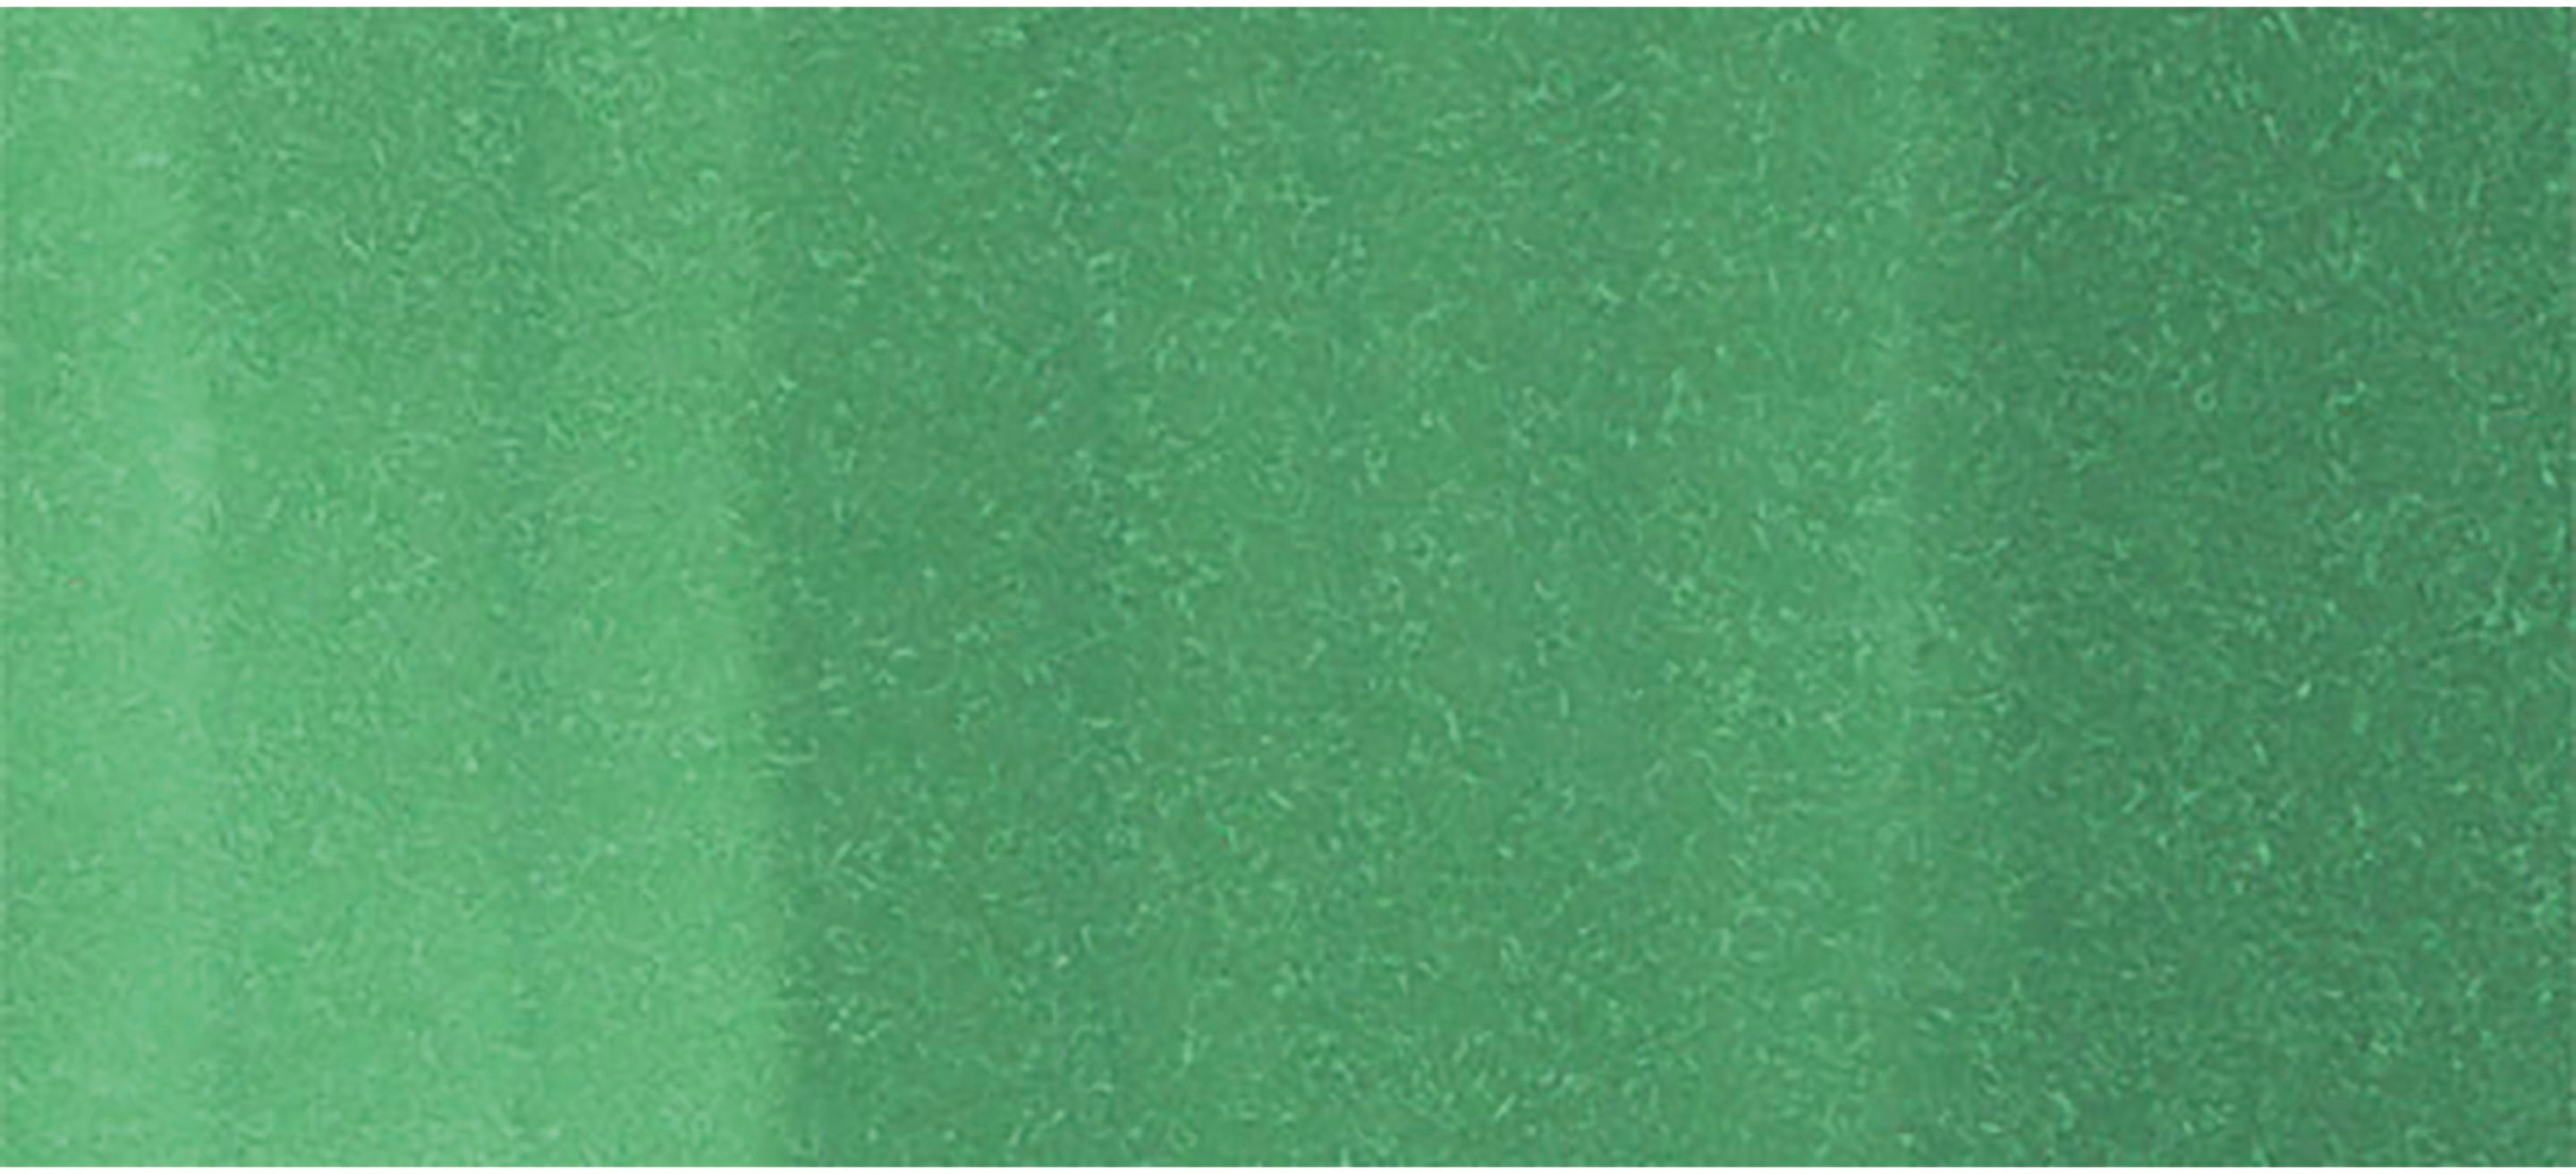 COPIC Marker Classic 20075208 G09 - Veronese Green